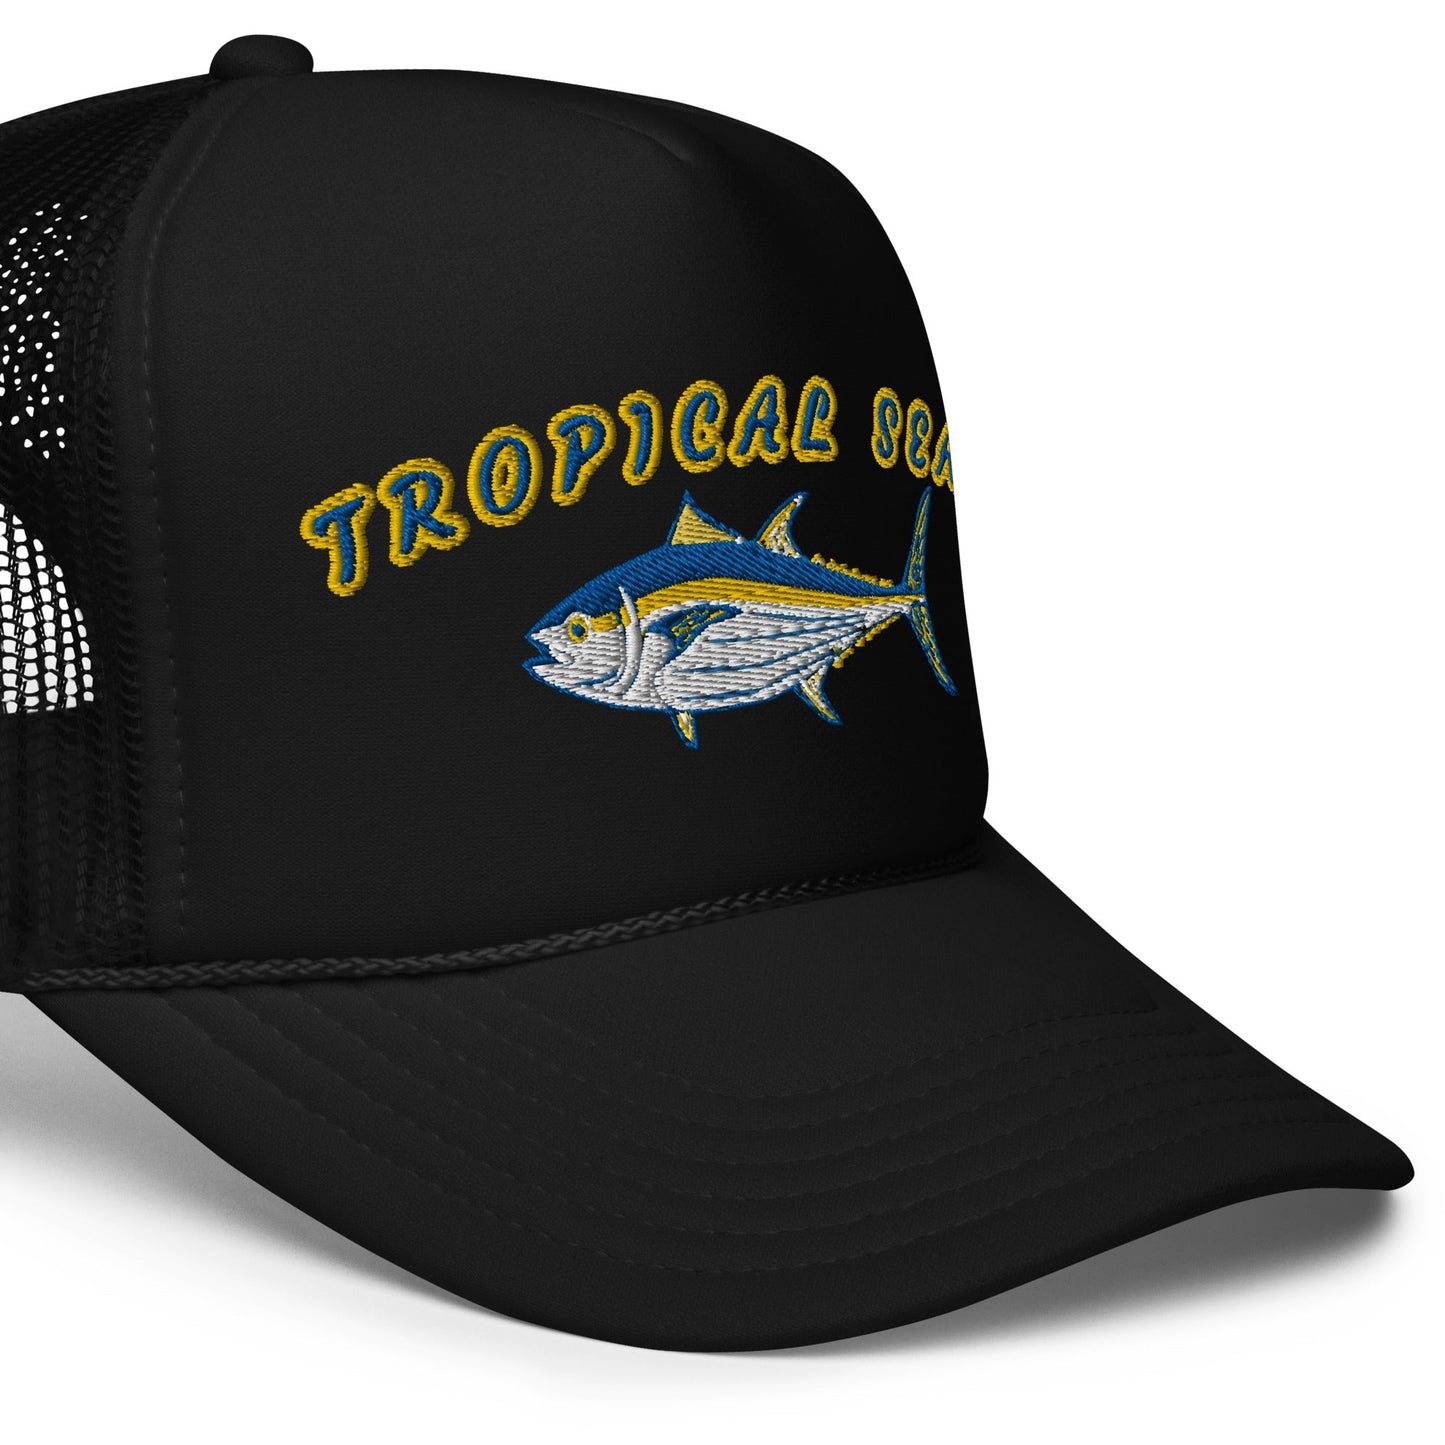 Tropical Seas Tuna Foam trucker hat - Tropical Seas Clothing 